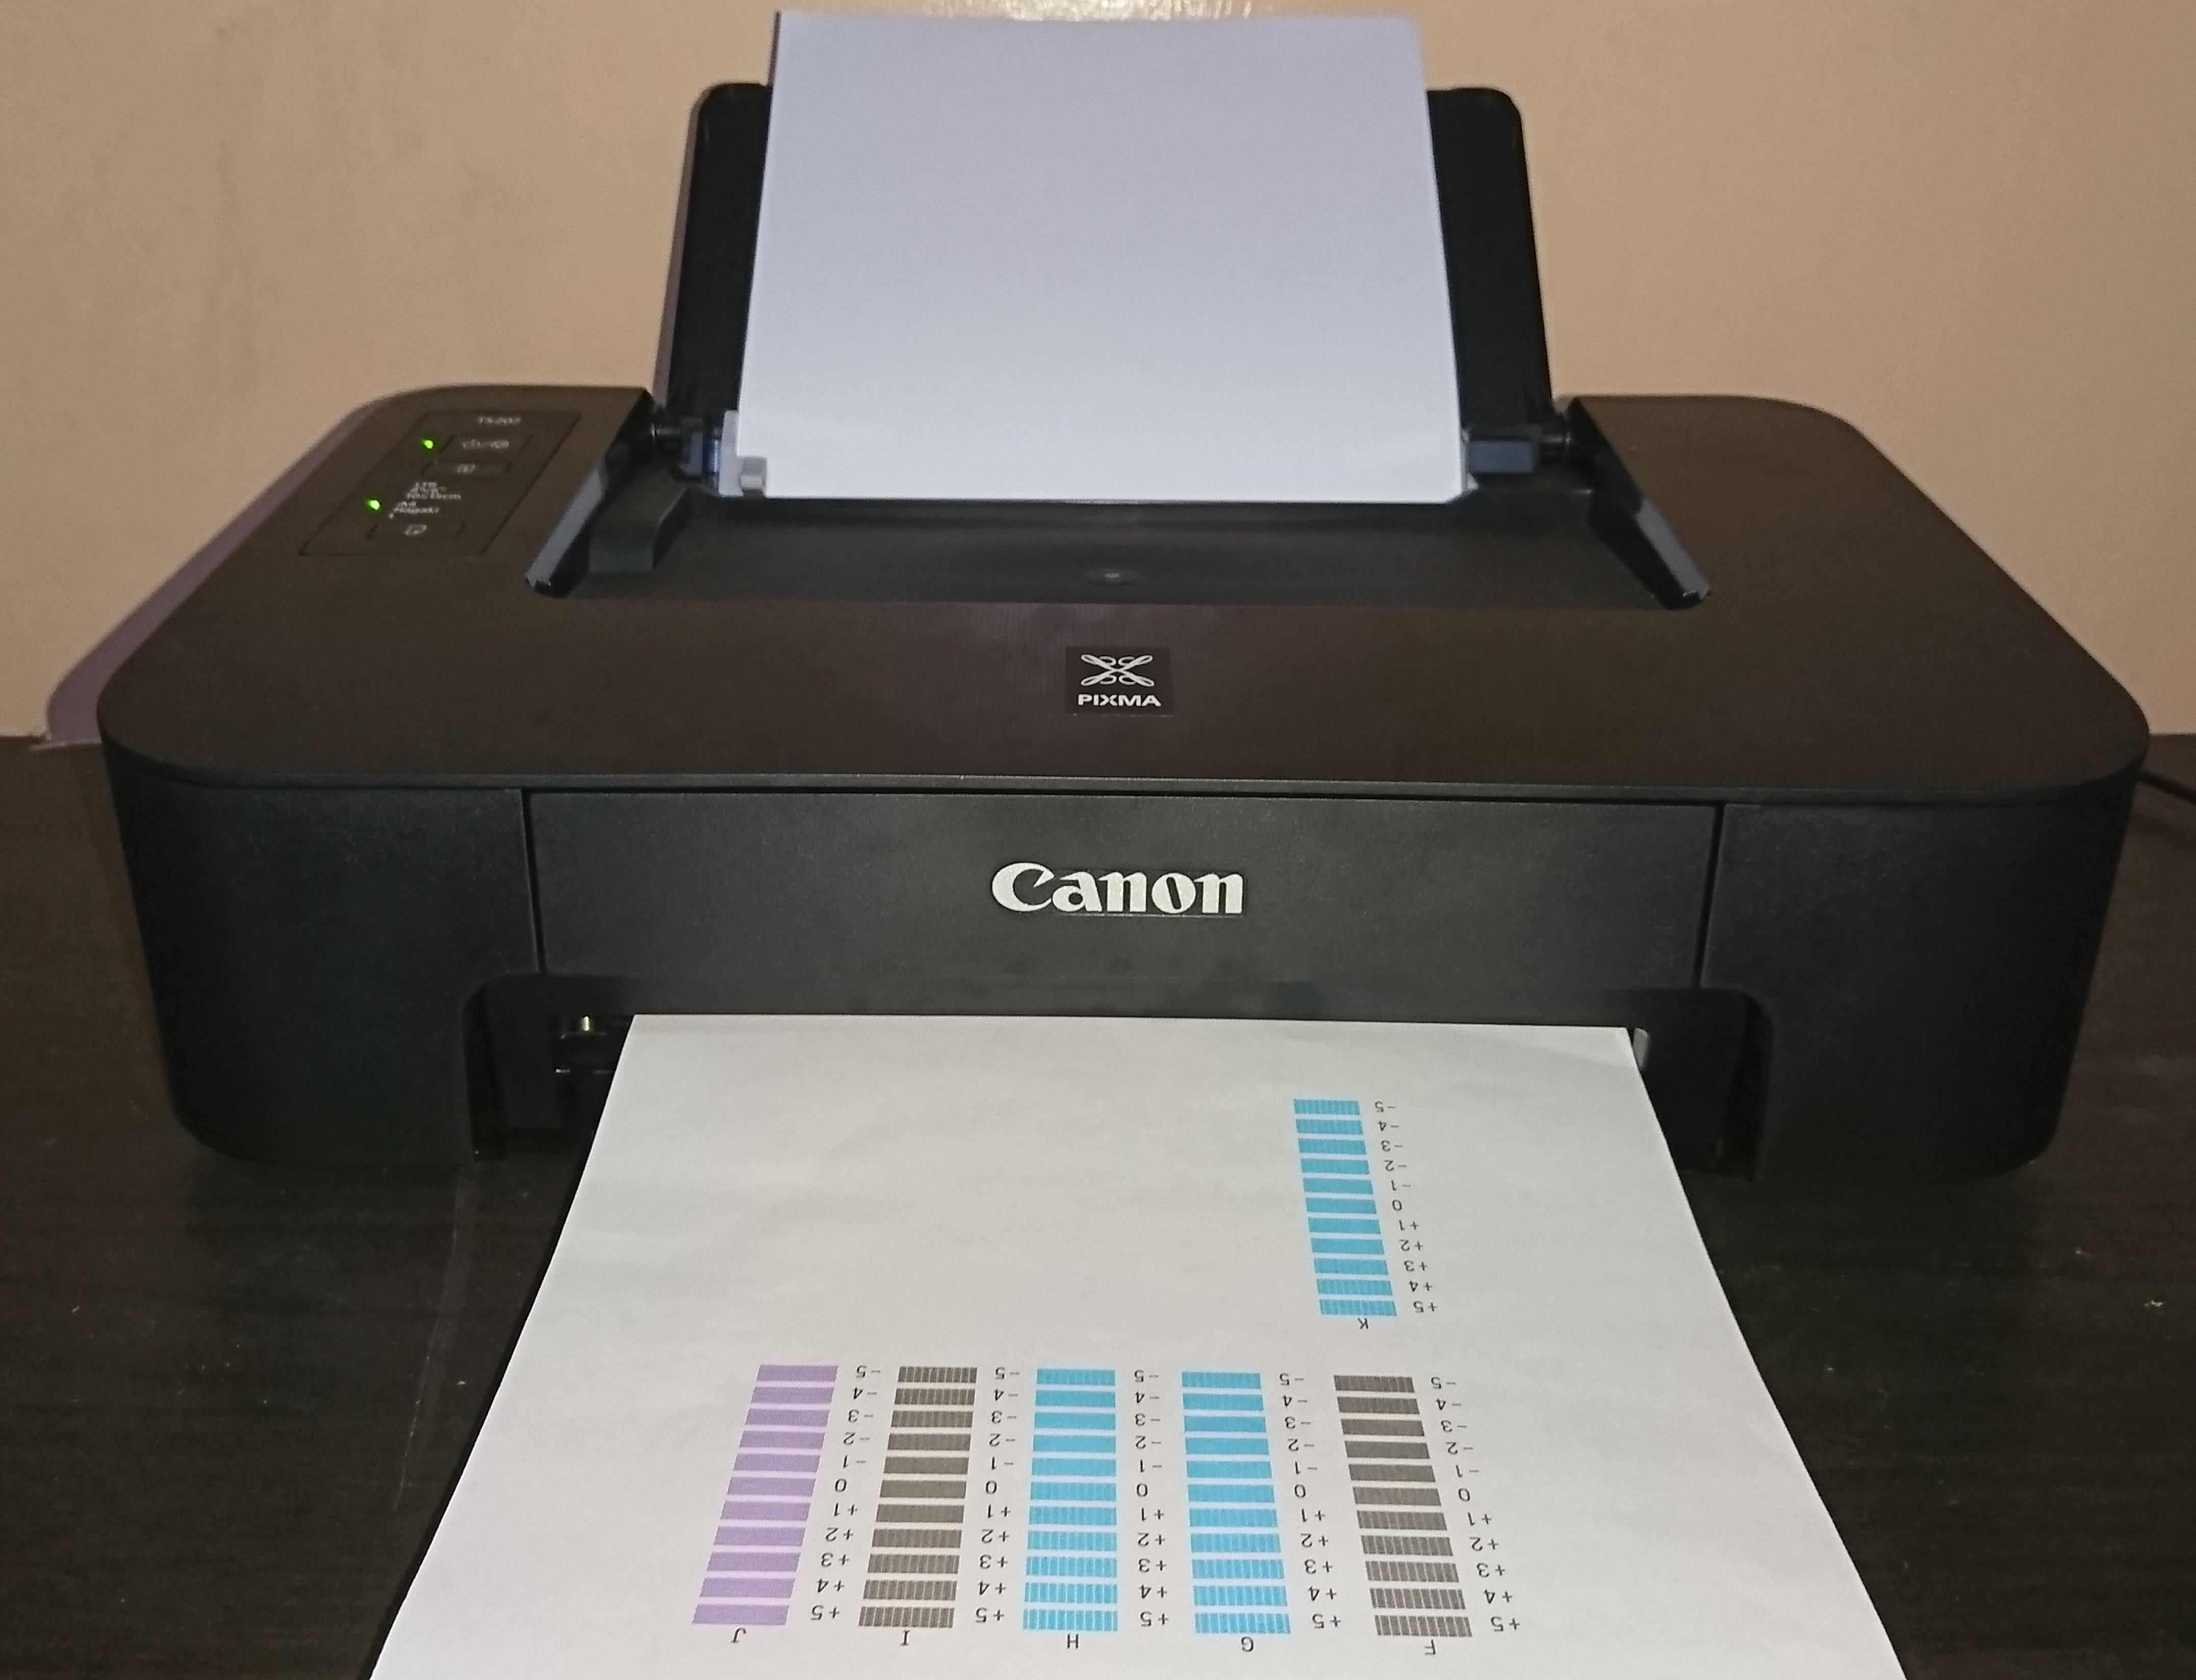 Printer with high-quality color print output